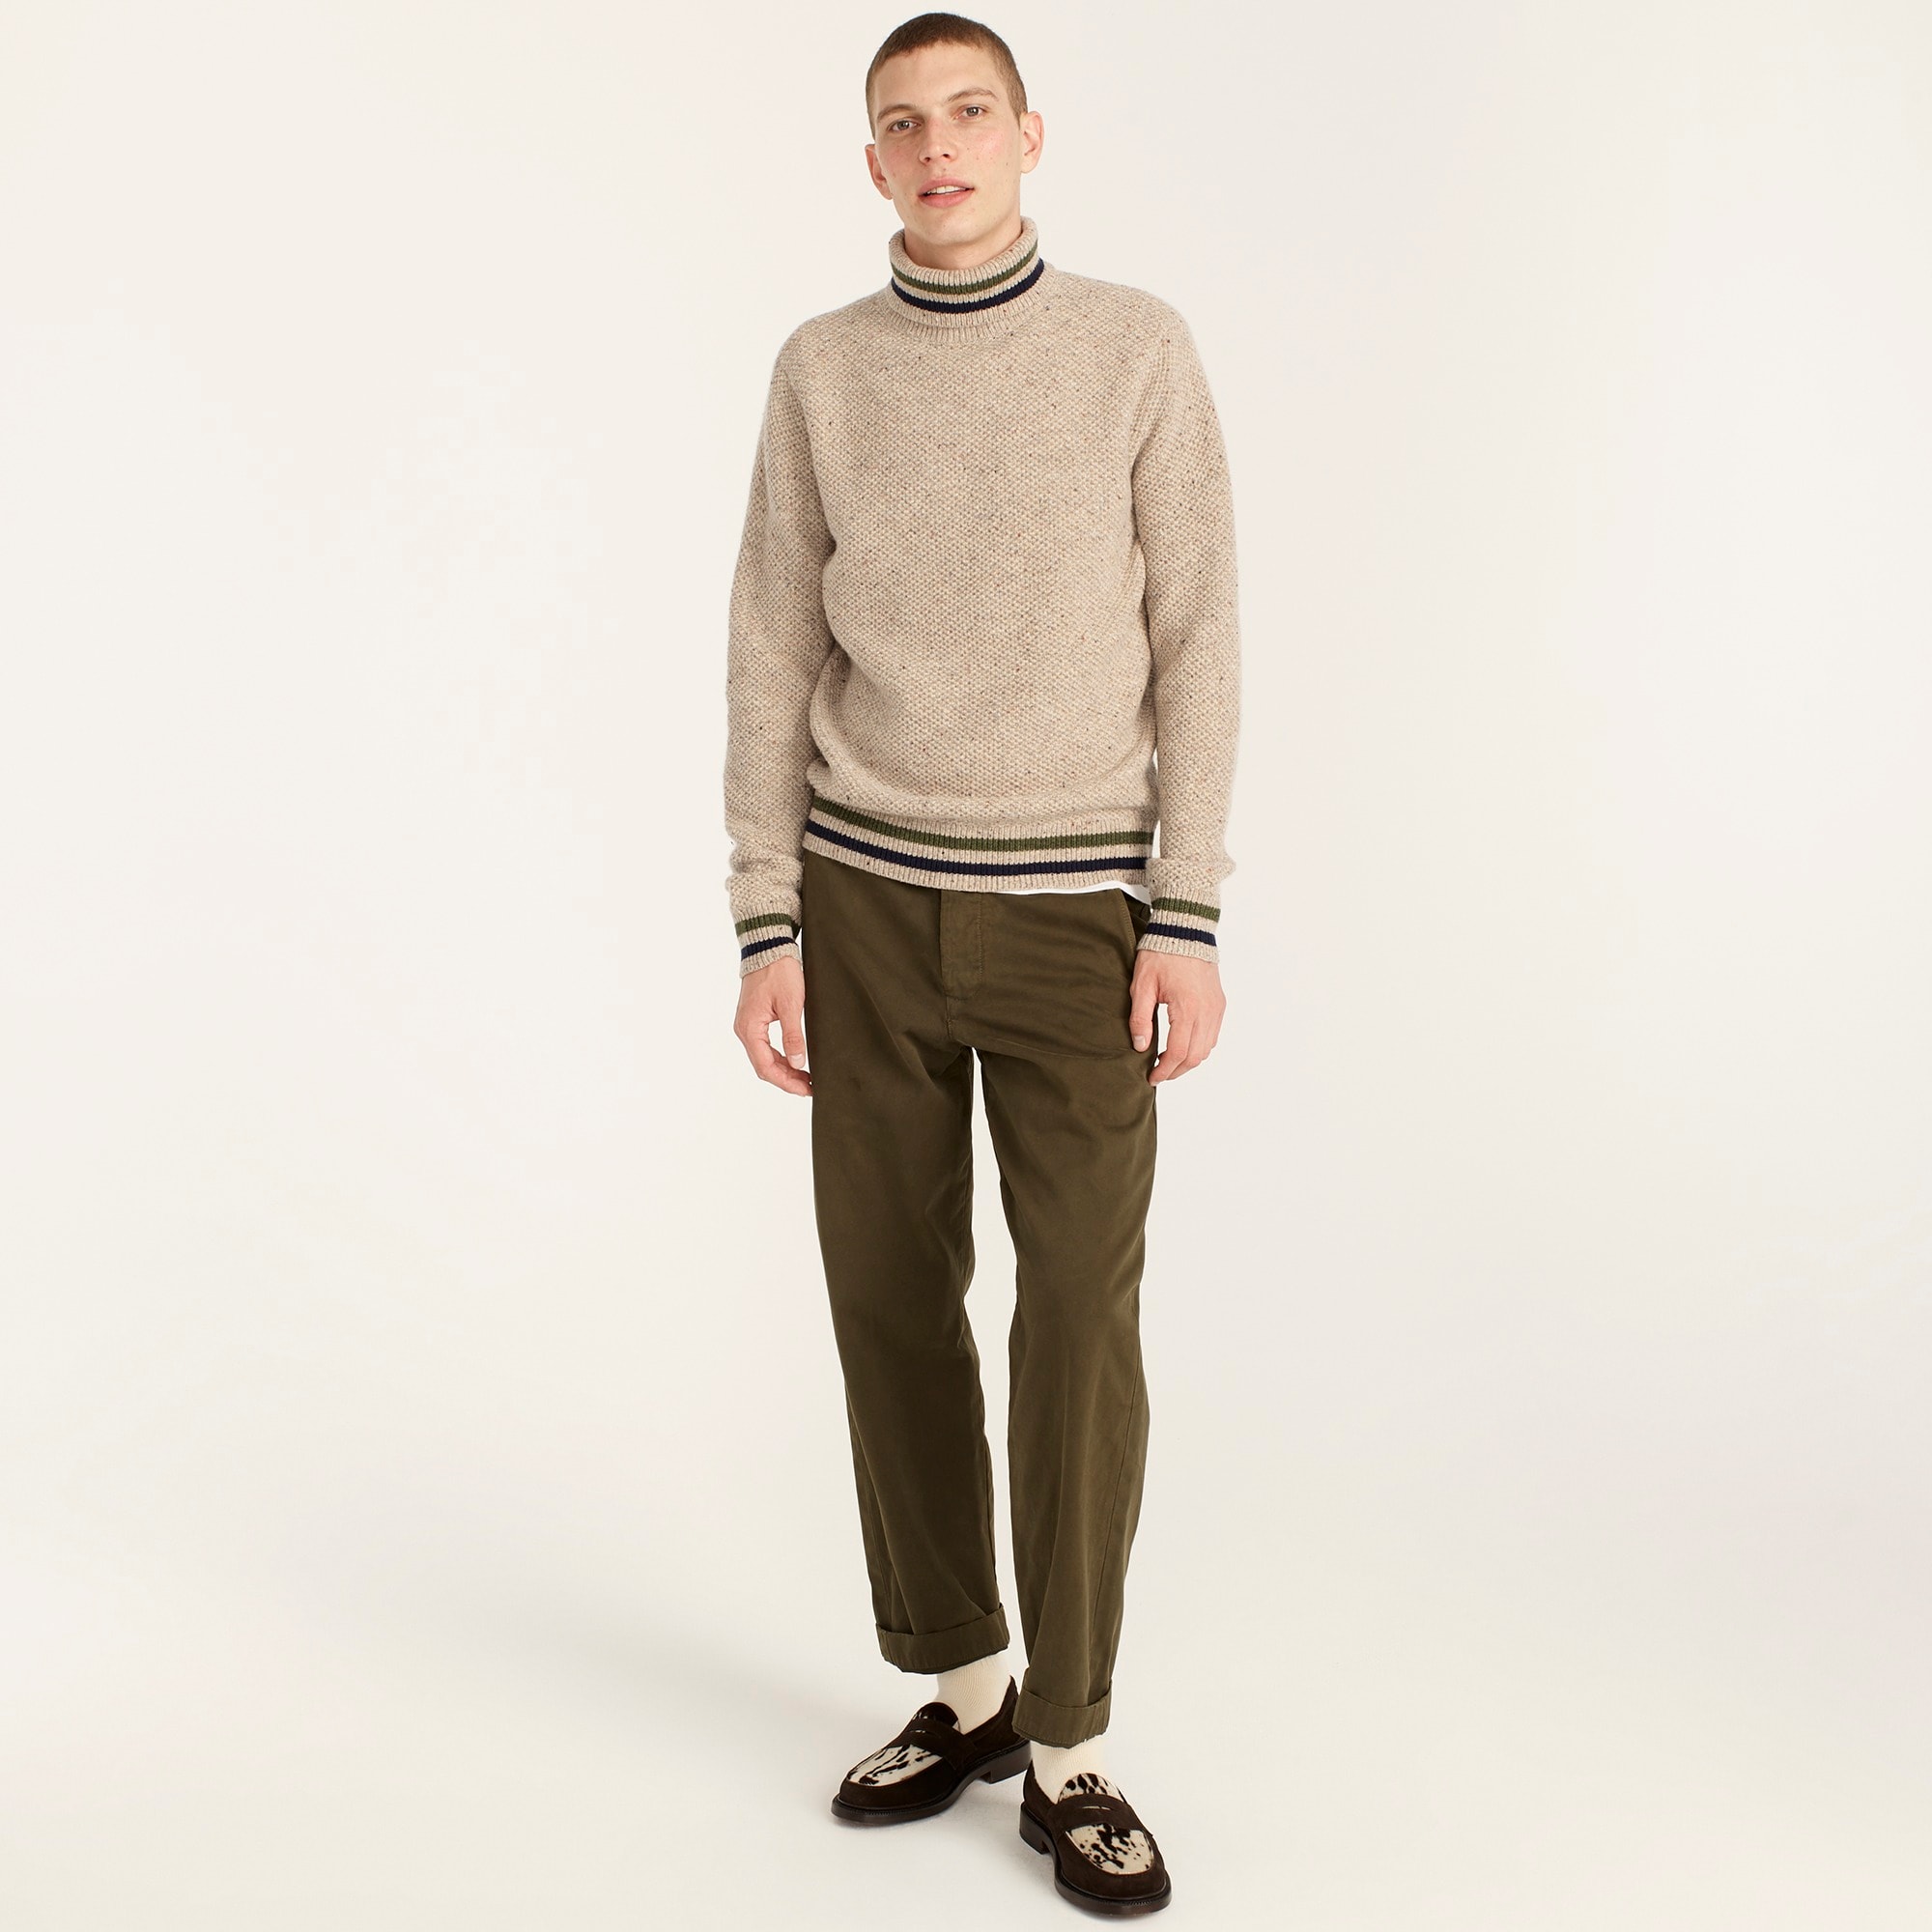 J.Crew: Textured Rugged Merino Wool Crewneck Sweater For Men